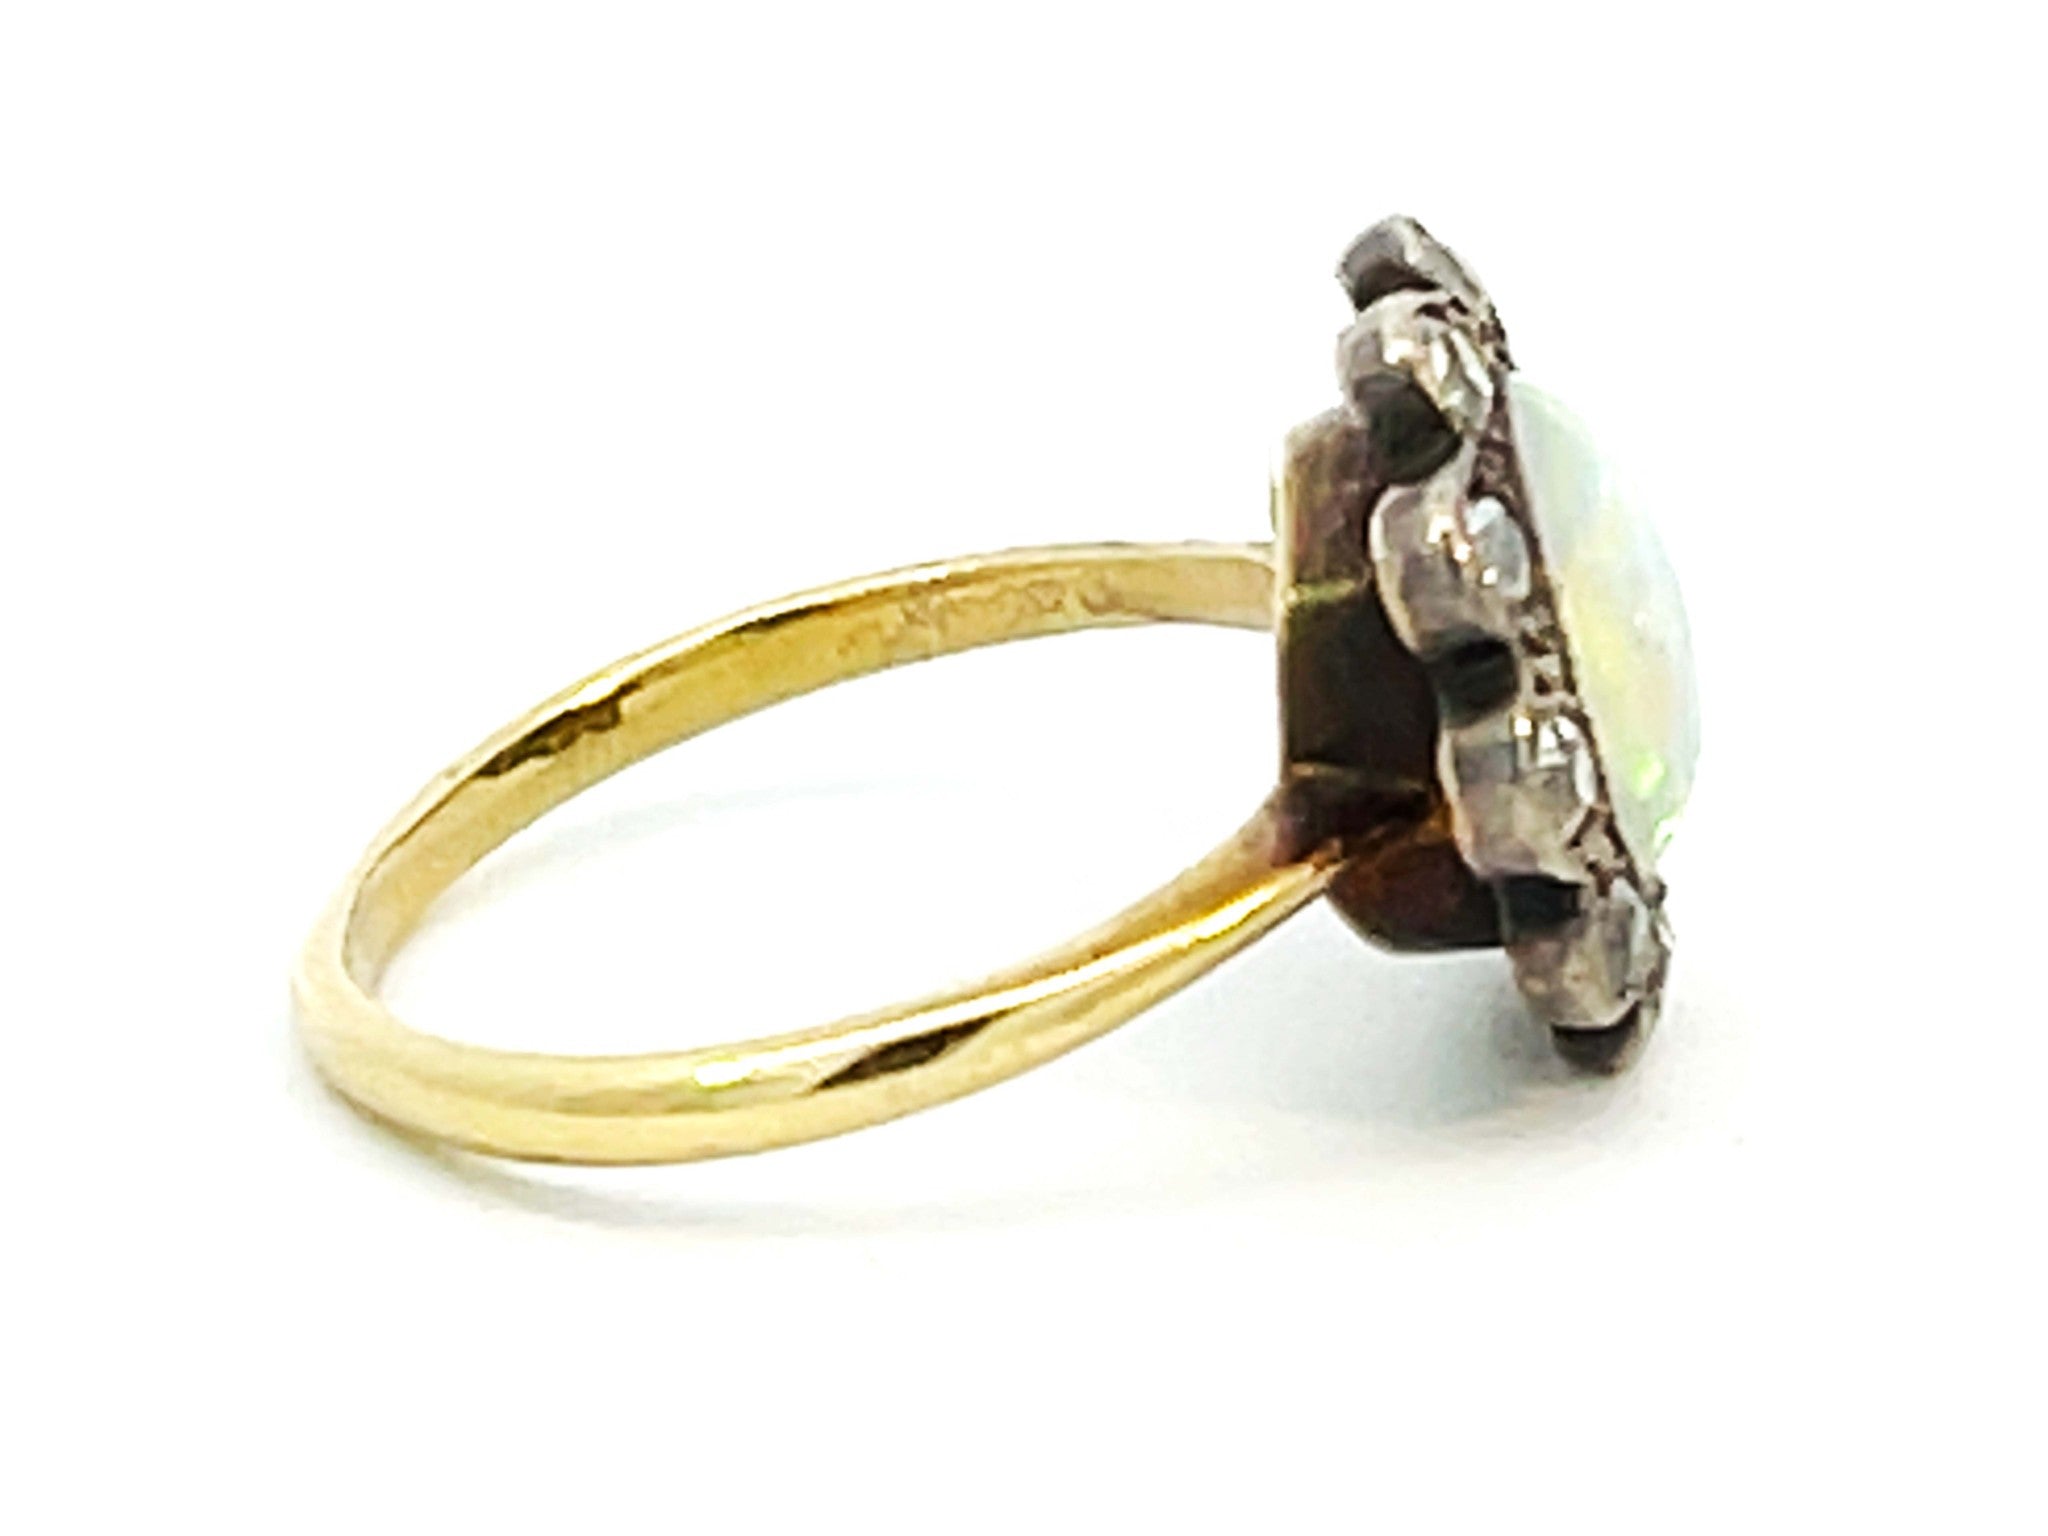 100 Year Old Antique Edwardian Era Opal and Diamond Flower Halo Ring